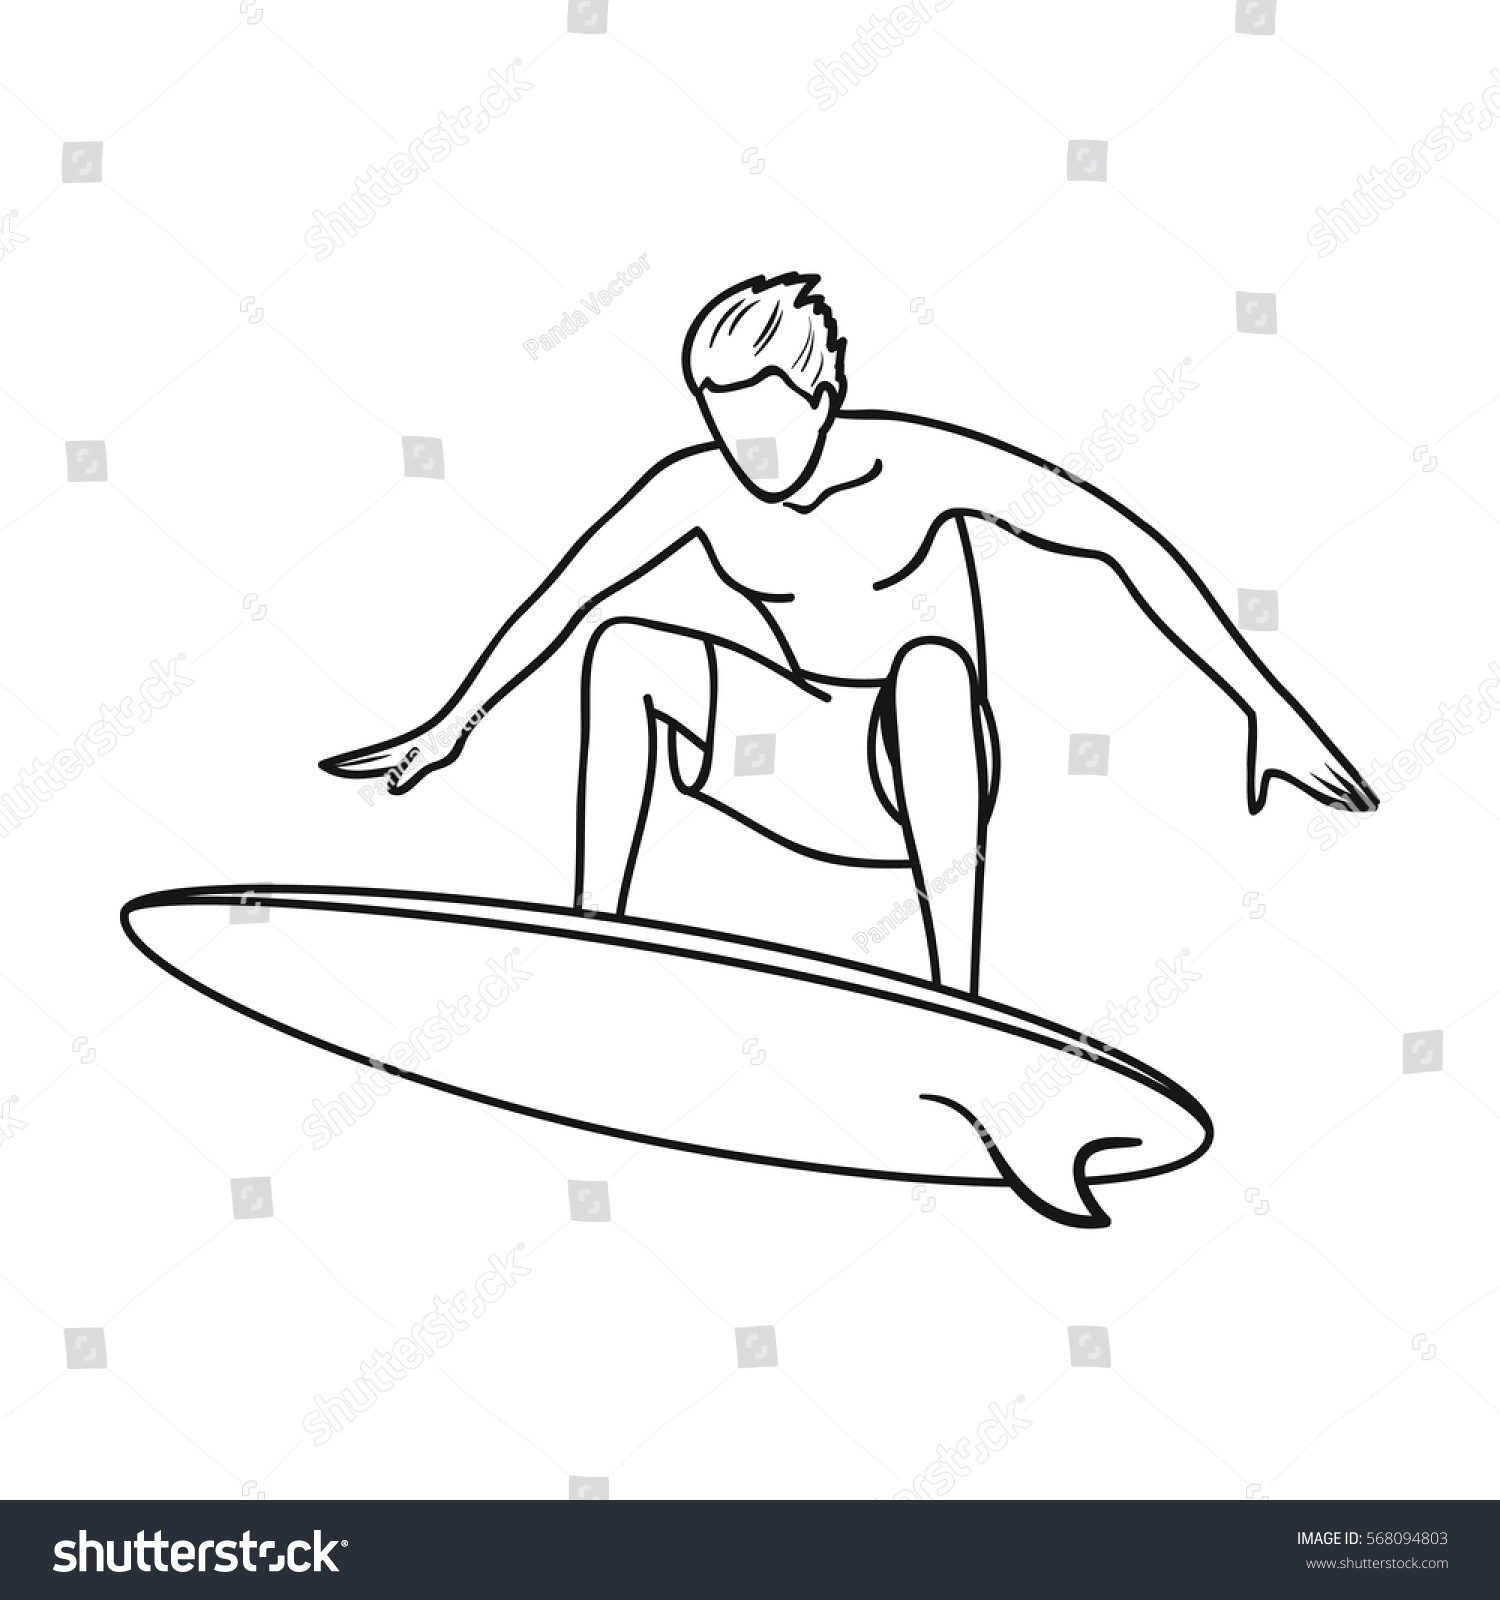 Surfer outline Stock Illustrations, Images & Vectors | Shutterstock